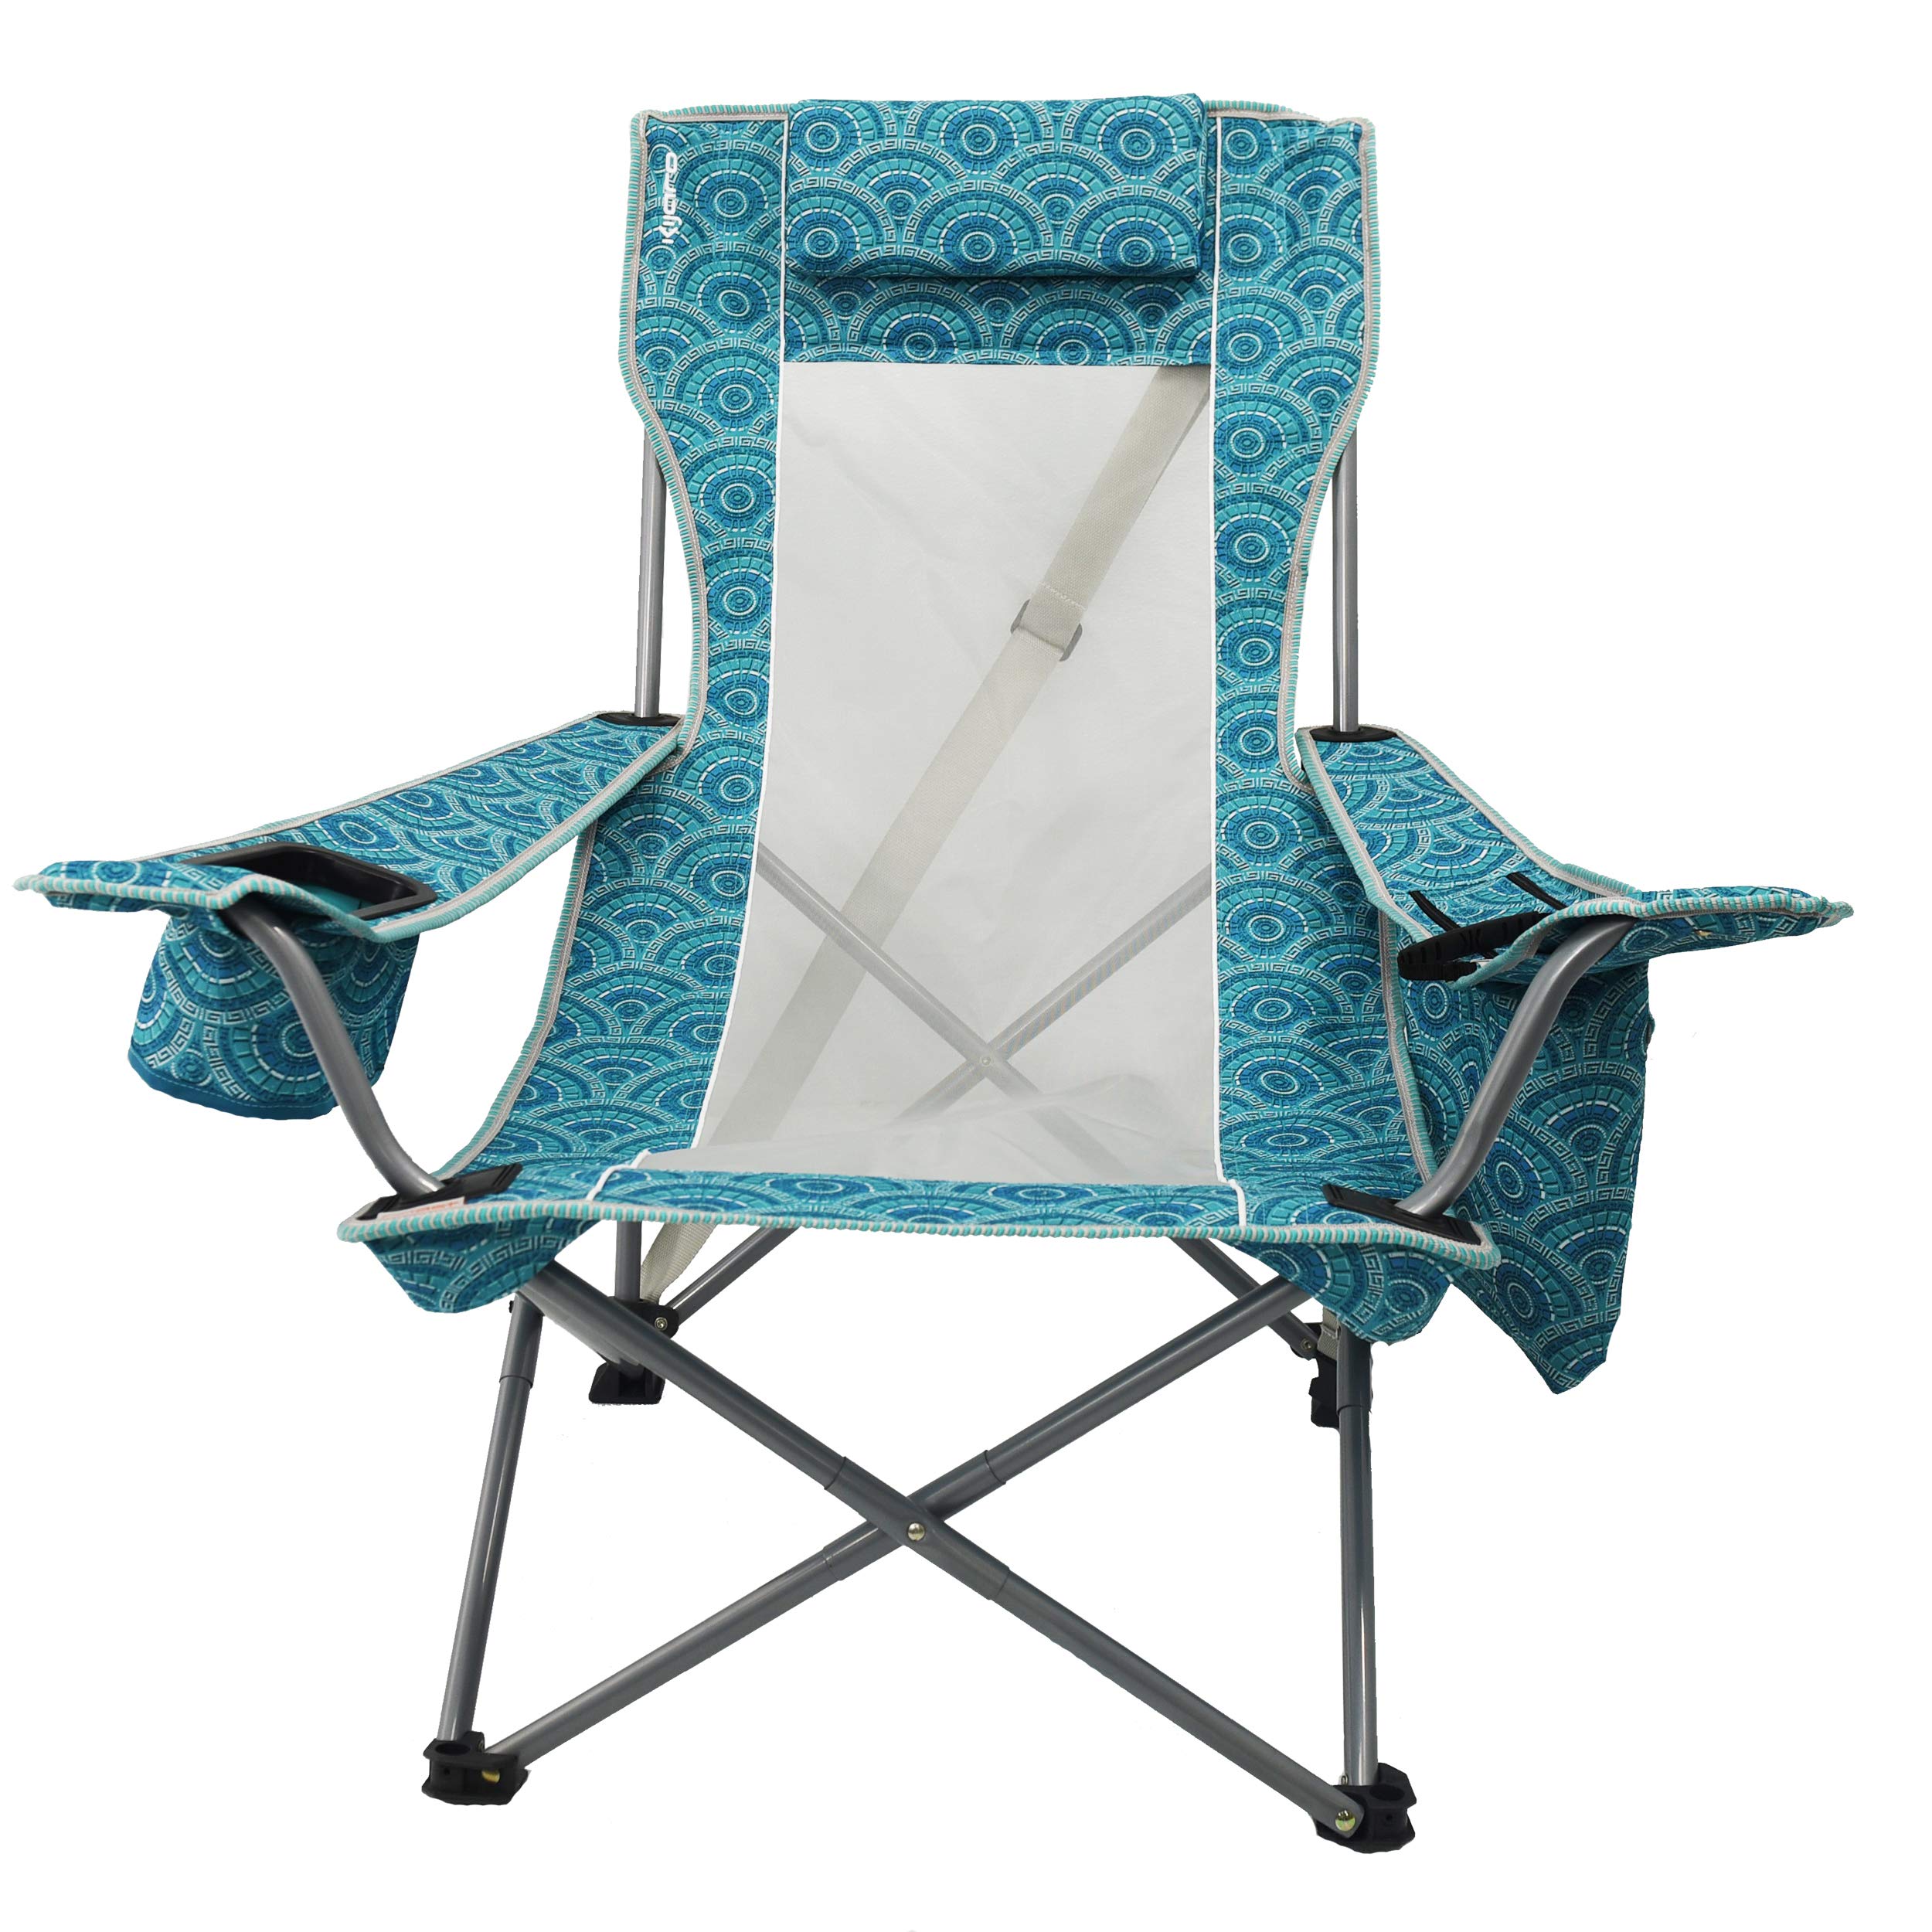 Kijaro Coast Beach Sling Chair One Size Ionian Turquoise - Journey Print並行輸入品